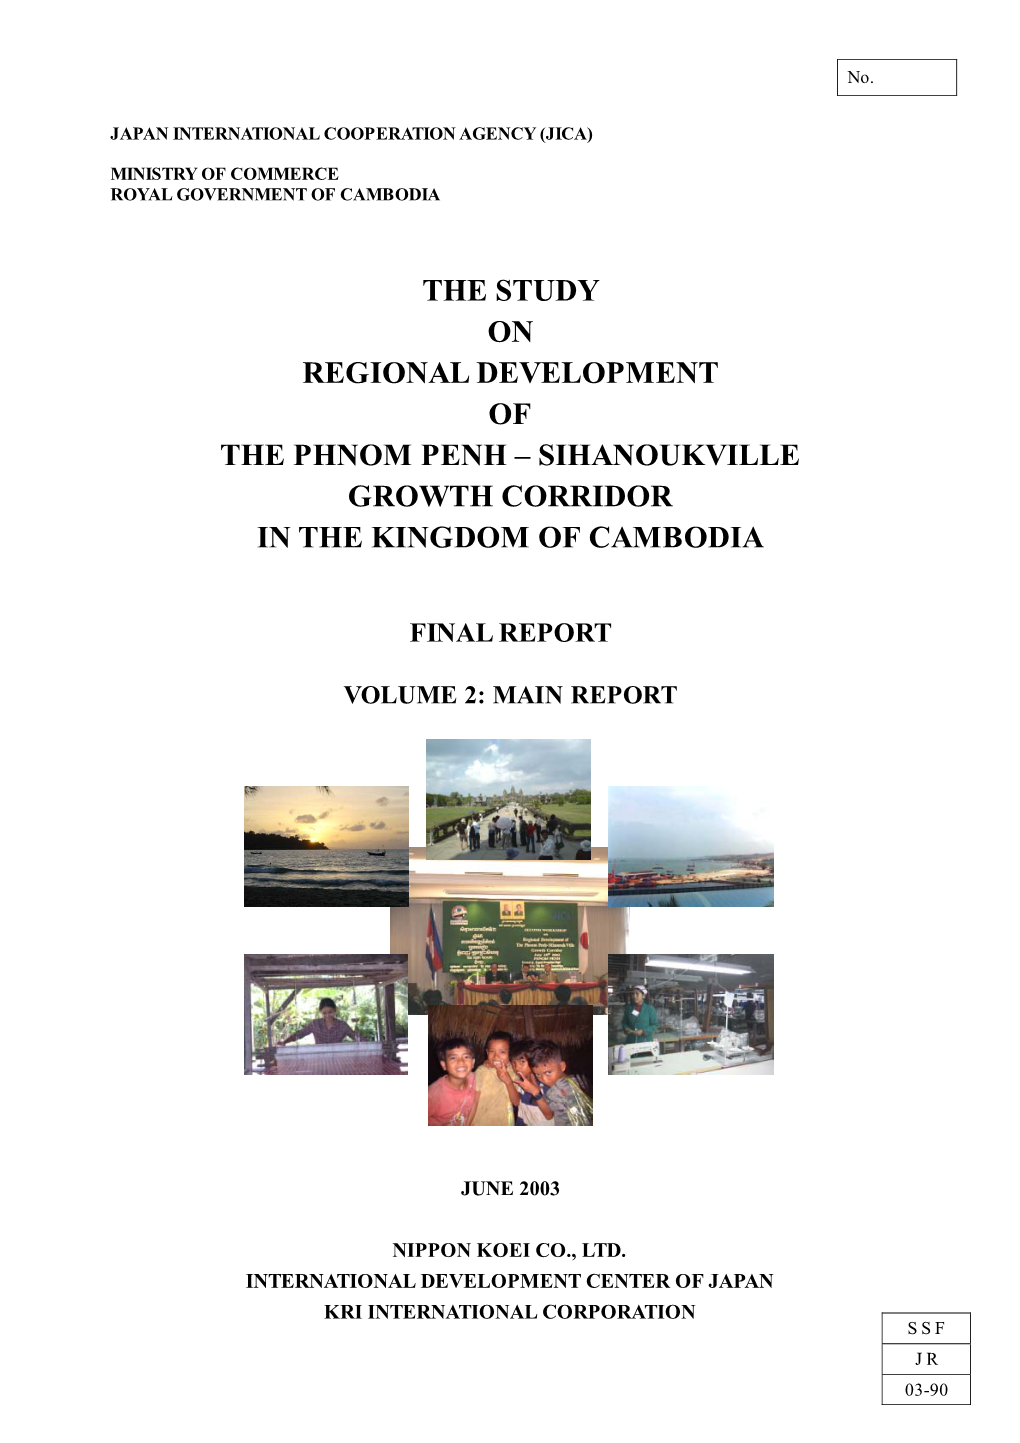 The Study on Regional Development of the Phnom Penh – Sihanoukville Growth Corridor in the Kingdom of Cambodia